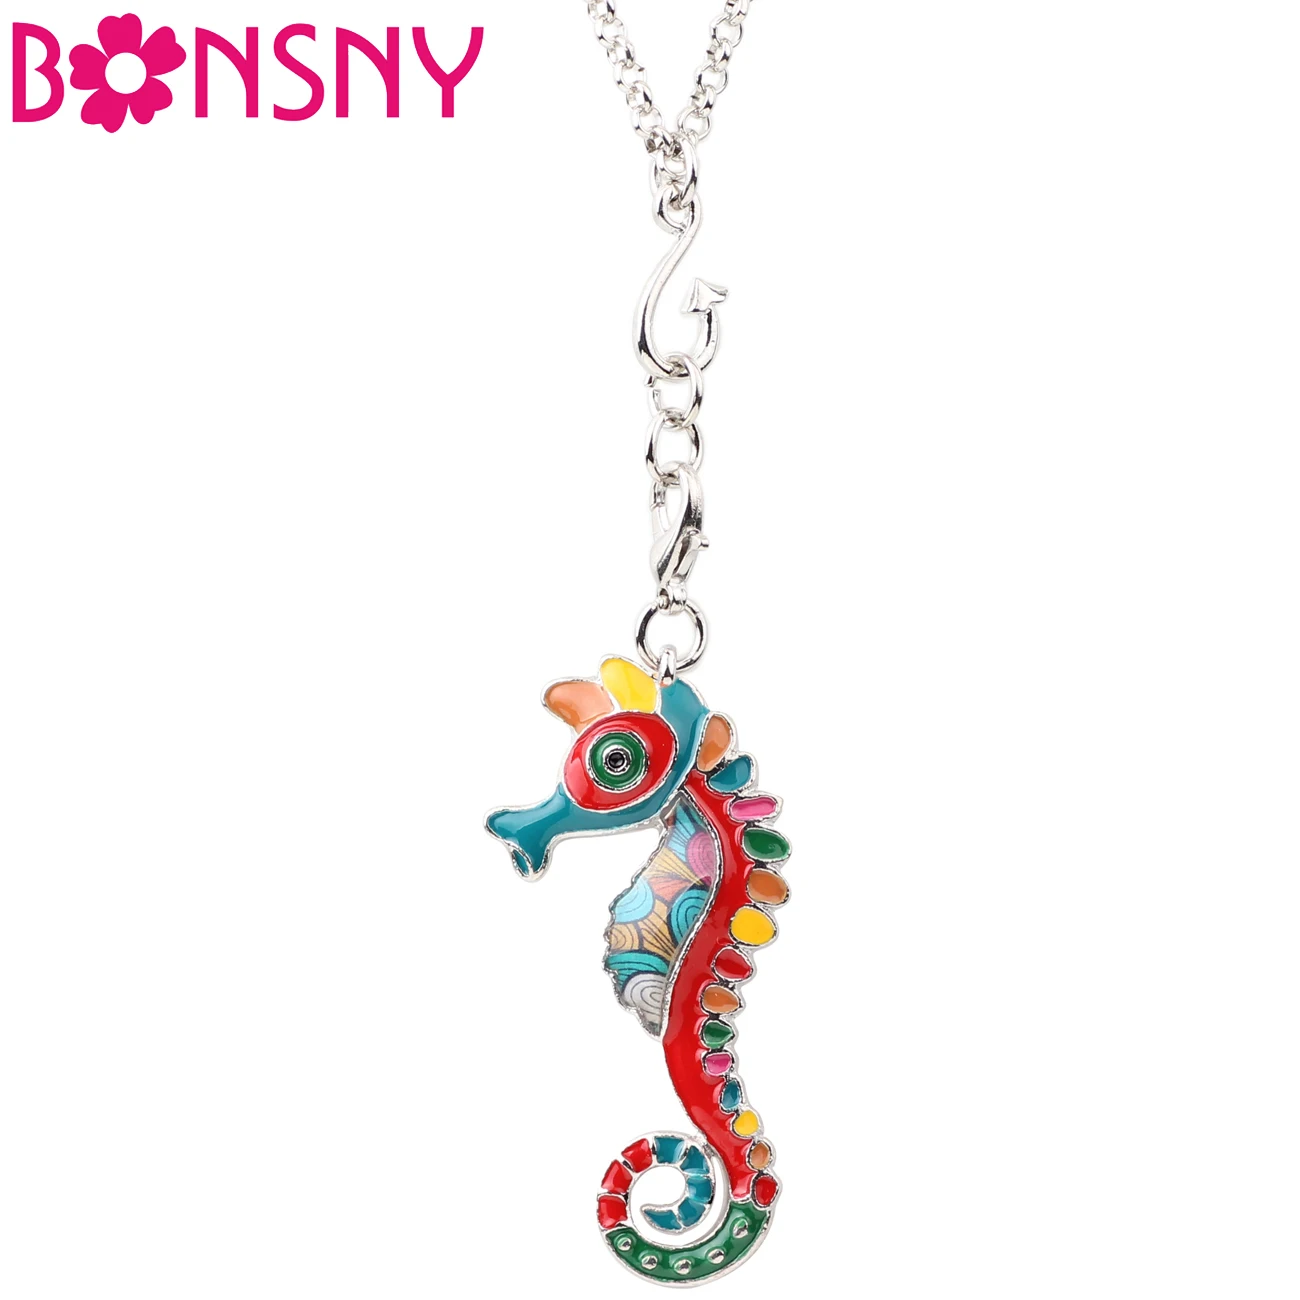 

Bonsny Enamel Alloy Ocean Animal Hippocampus Necklace Pendant Chain Choker Hot Charm Novelty Jewelry For Women Girls Teens Gift